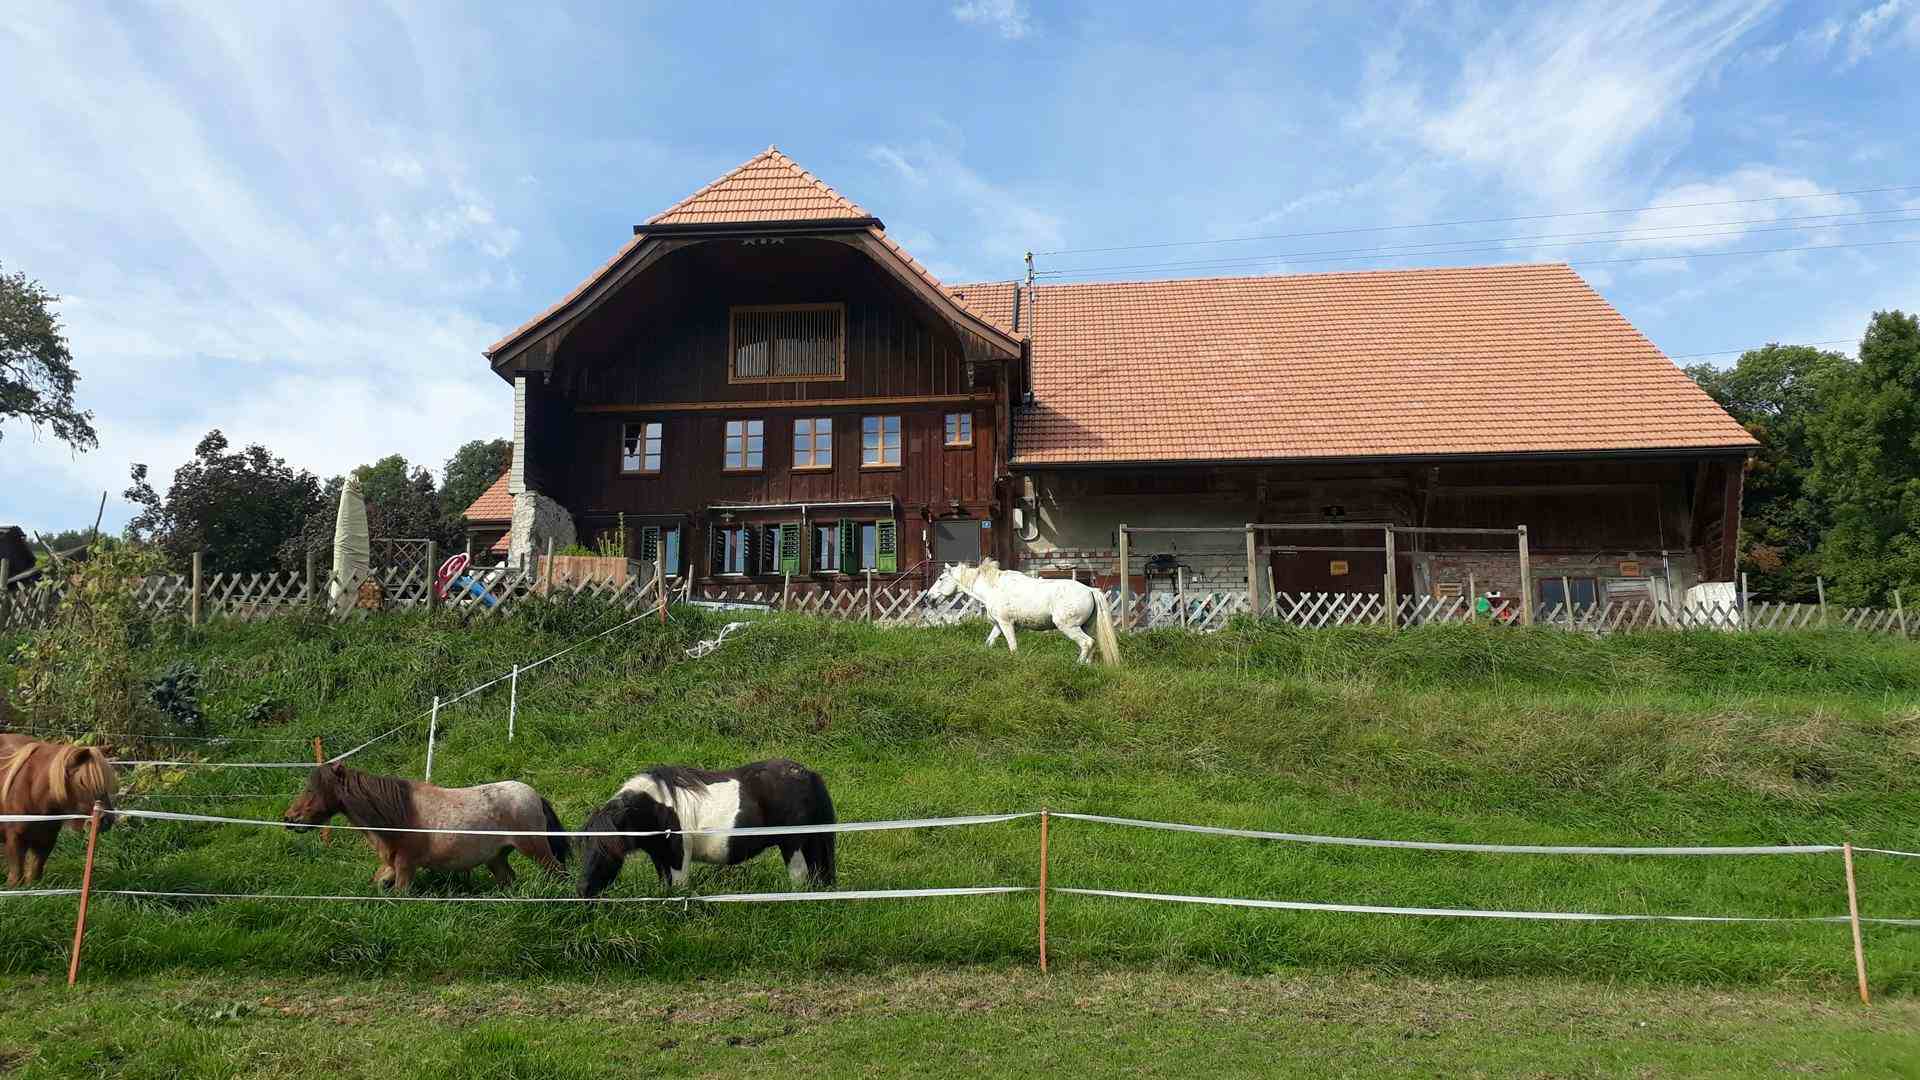 Pferdepensionsstall-Lyss, produttore nel Lyss canton Berna in Svizzera